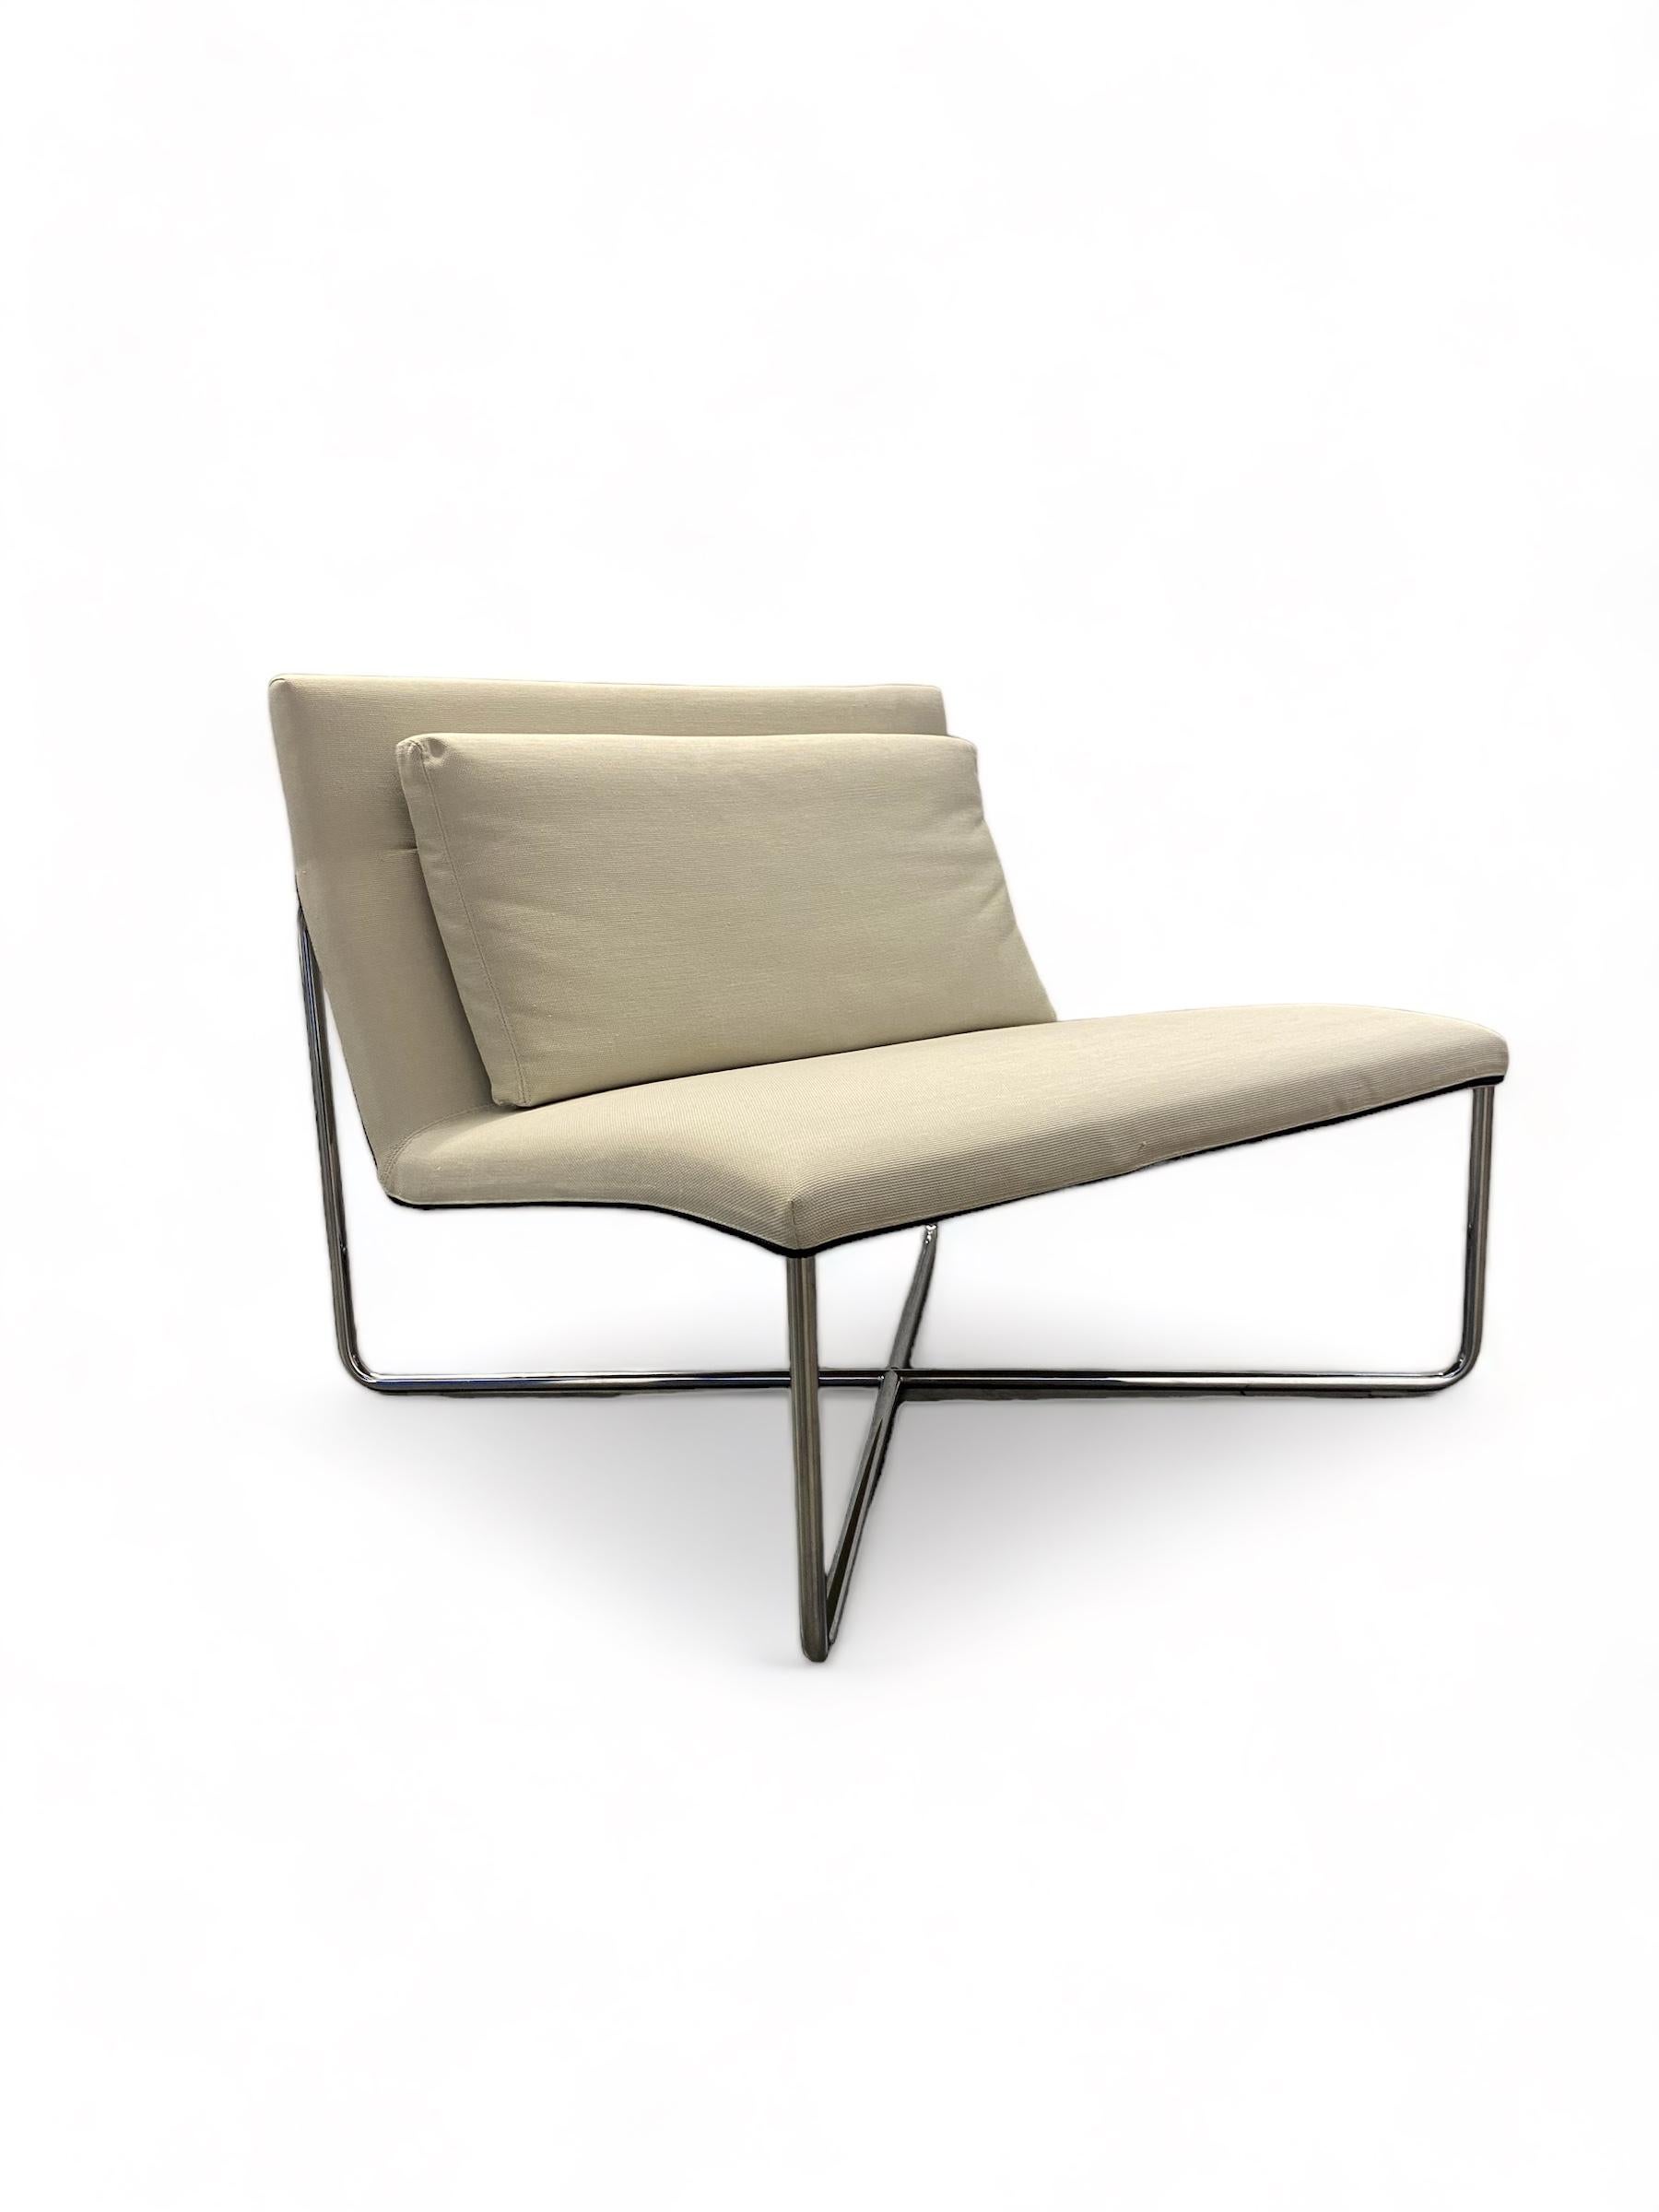 Contemporary White Diller chair designed by Rodolfo Dordoni for Minotti, Italy.